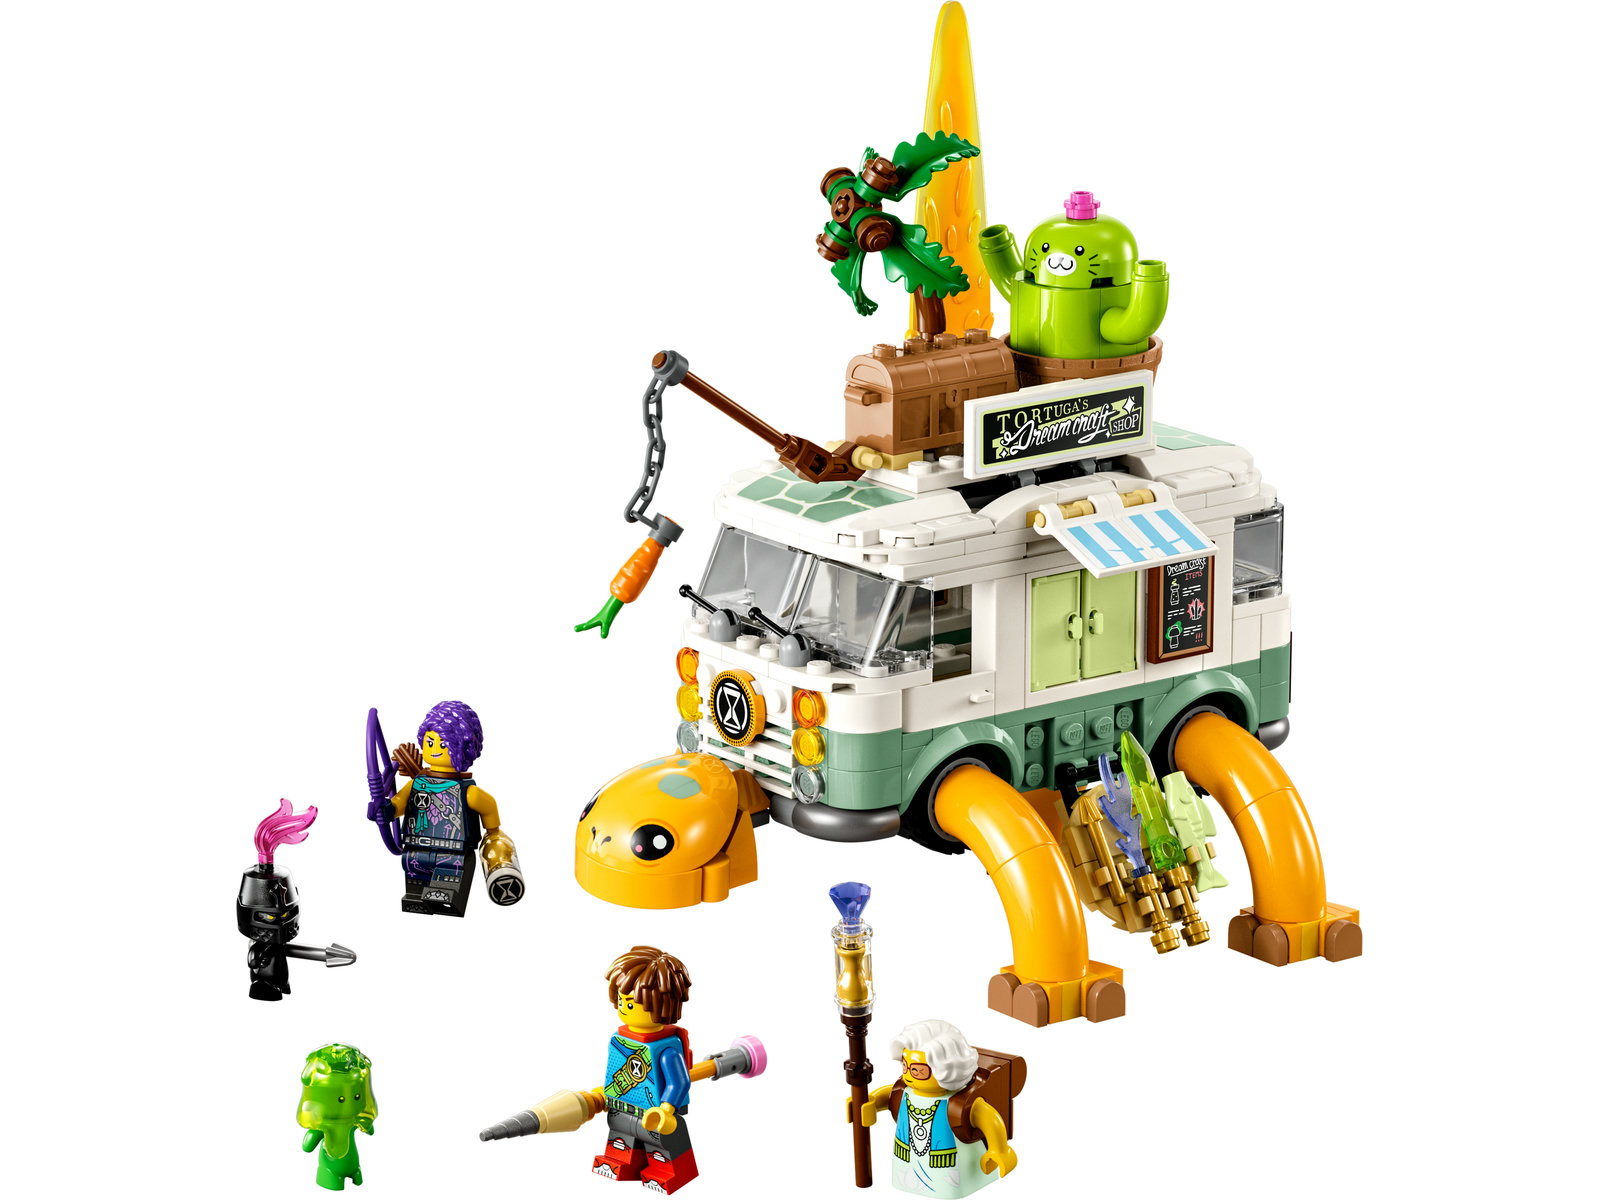 LEGO® DREAMZzz 71456 - Mrs. Castillos Schildkrötenbus